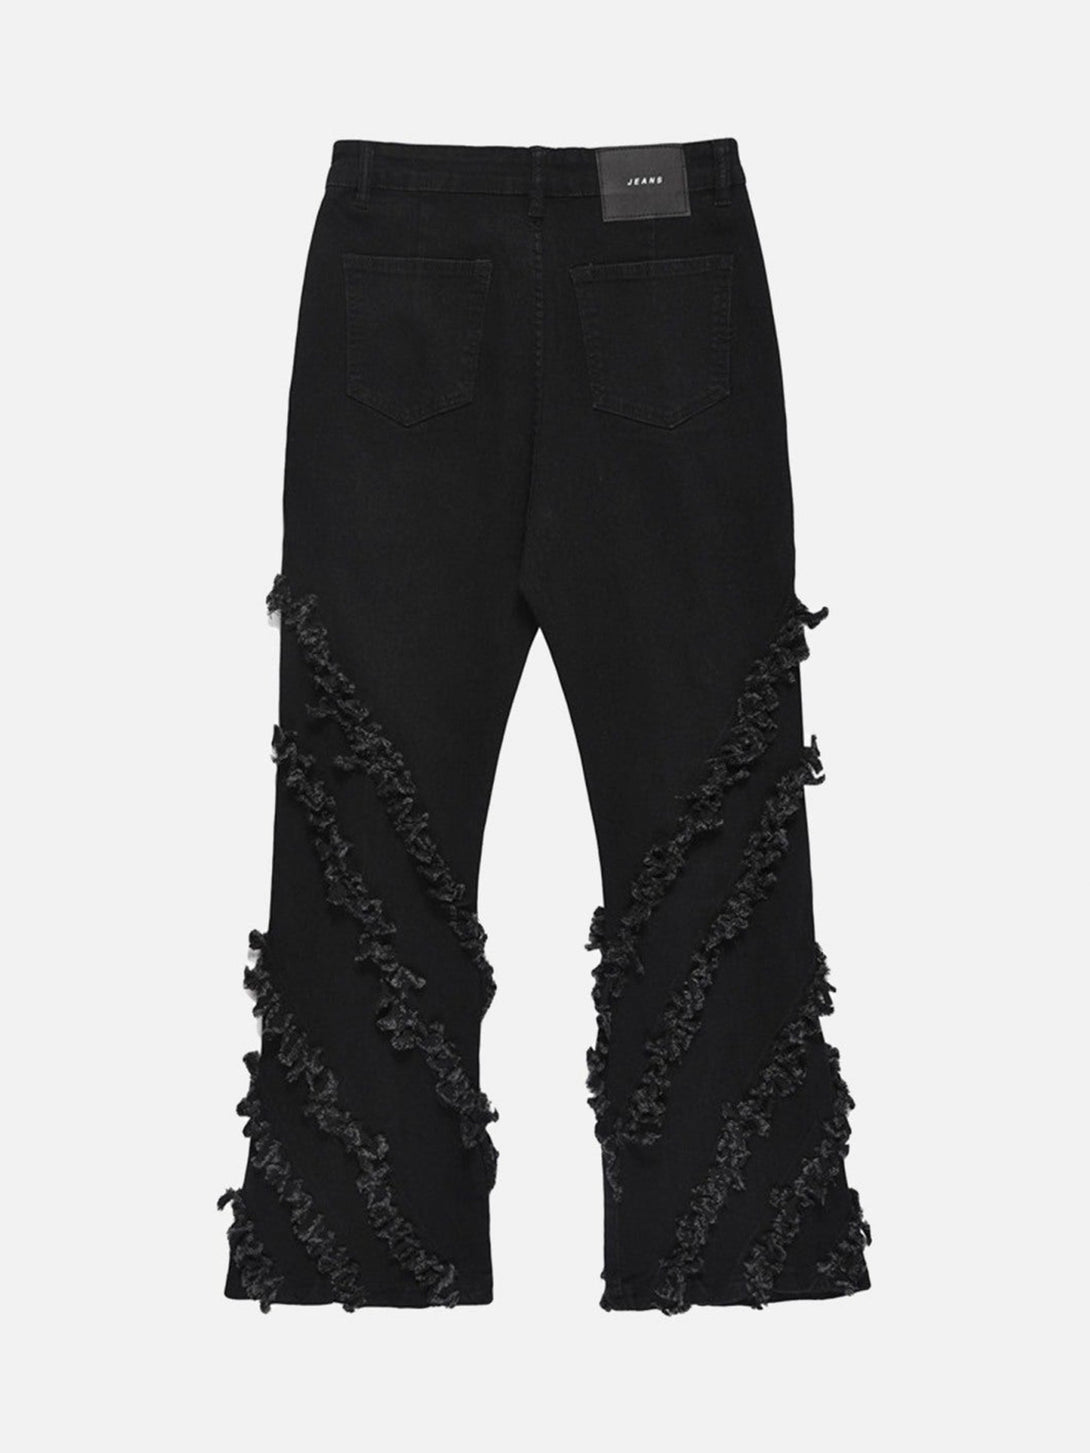 Majesda® - Trendy Personalized Flared Jeans - 1721- Outfit Ideas - Streetwear Fashion - majesda.com